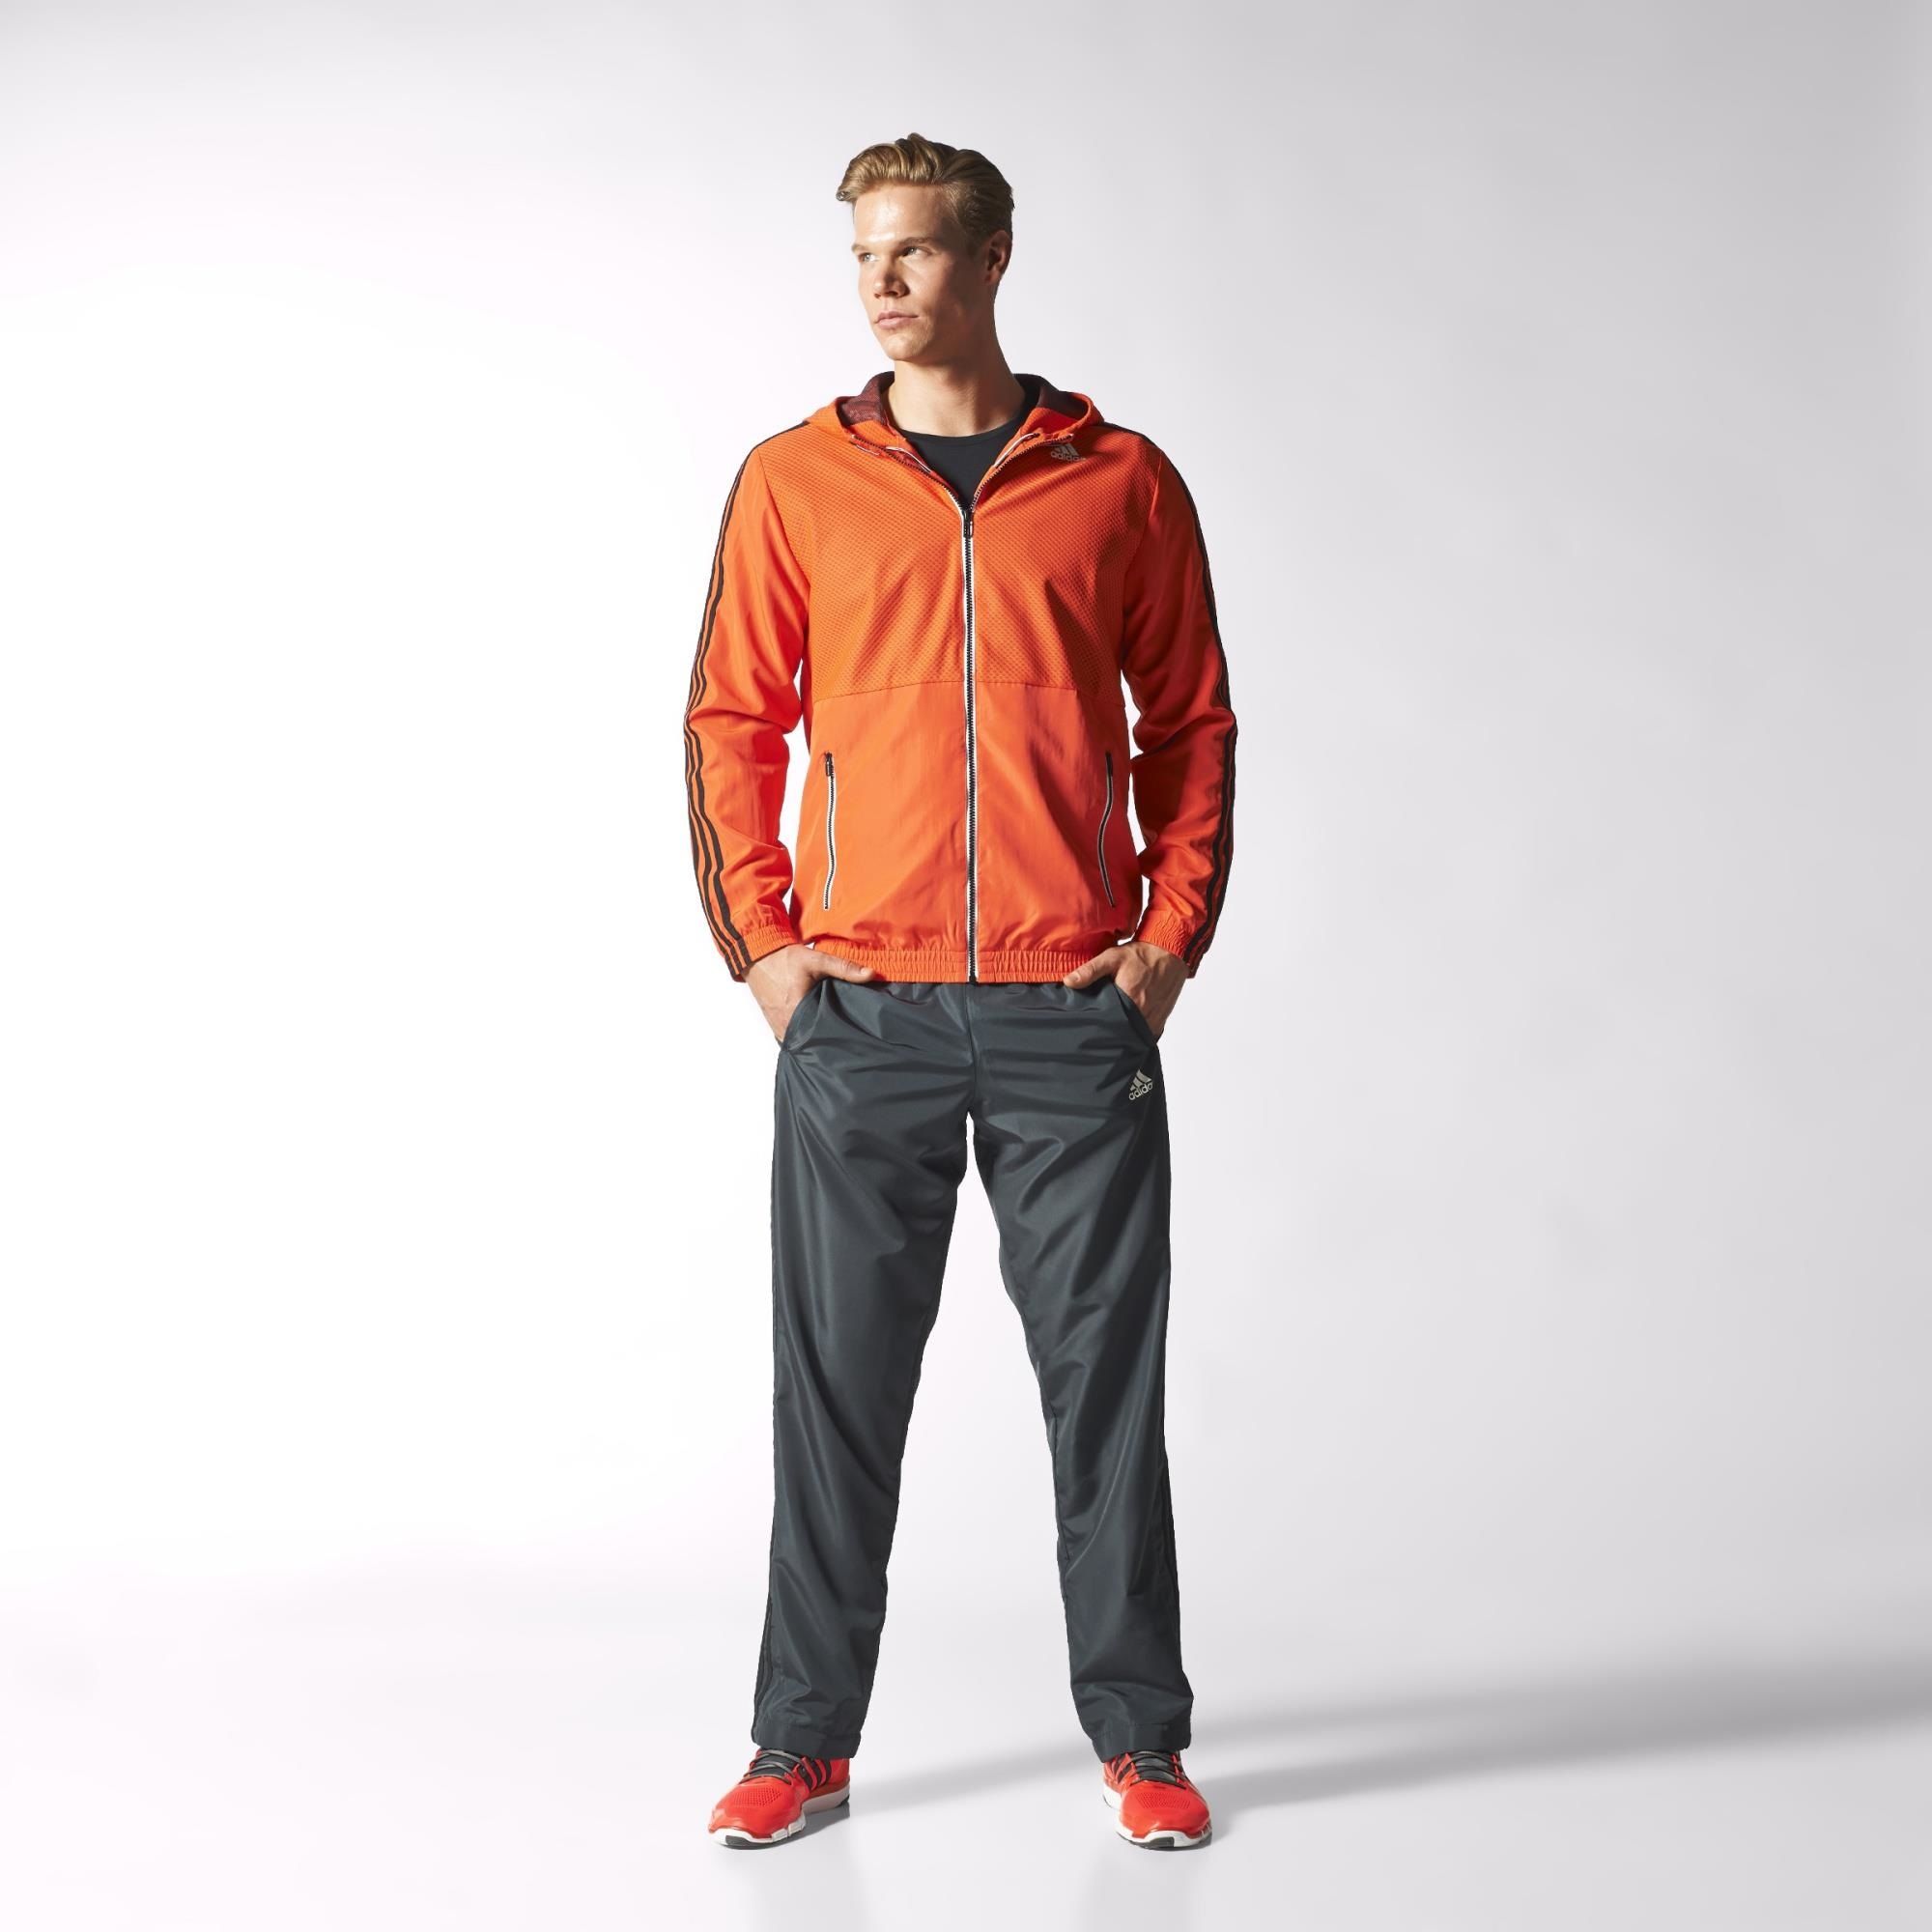 Adidas Hombre Training Climalite (naranja/grisoscuro)